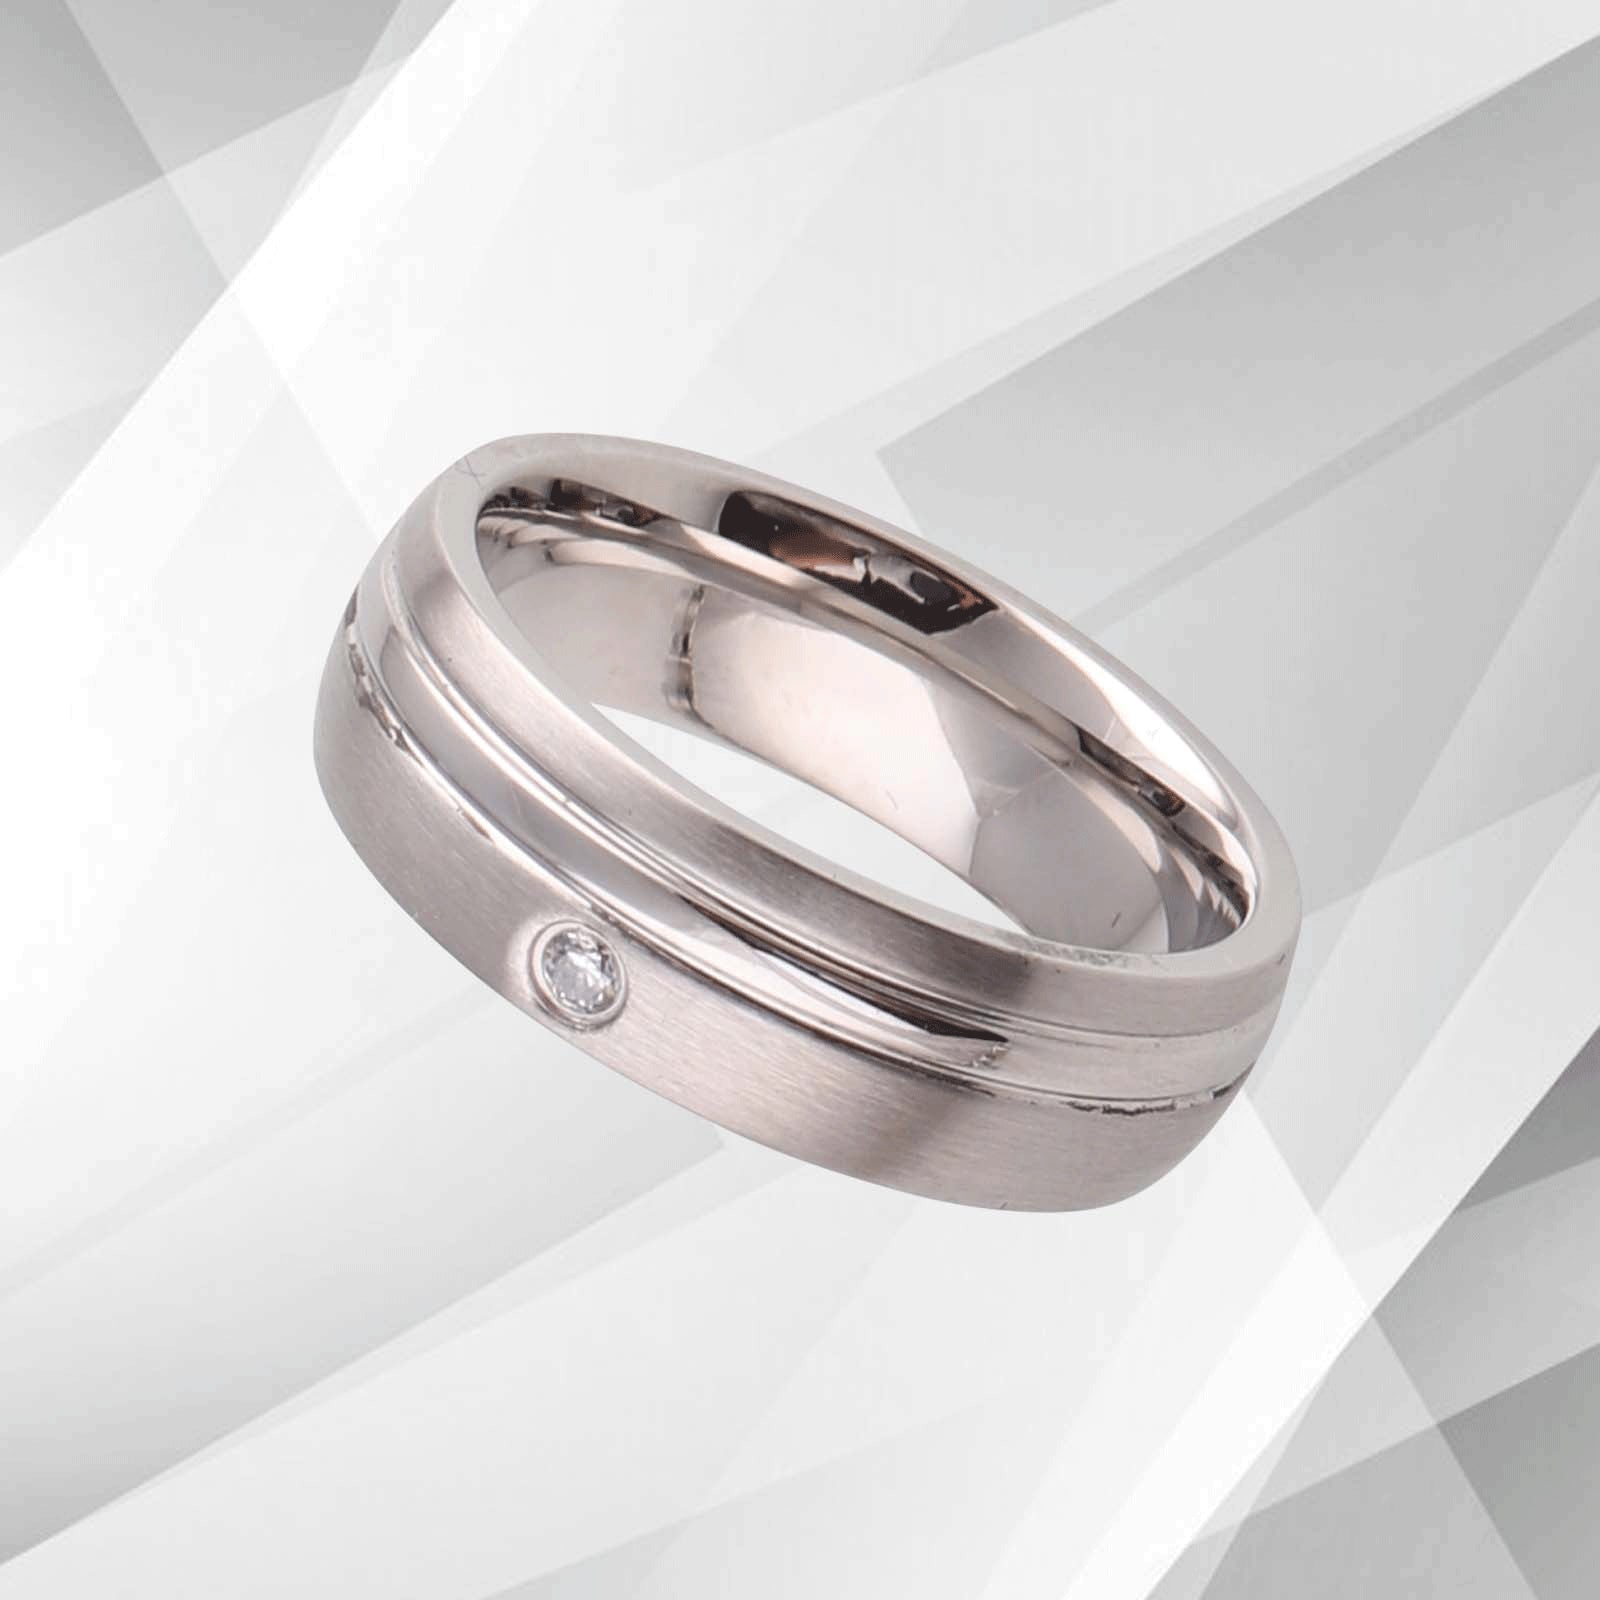 Titanium CZ Diamond Wedding Band Ring - 6mm Wide, Comfort Fit, White Gold Finish - Jewelry & Watches - Bijou Her -  -  - 